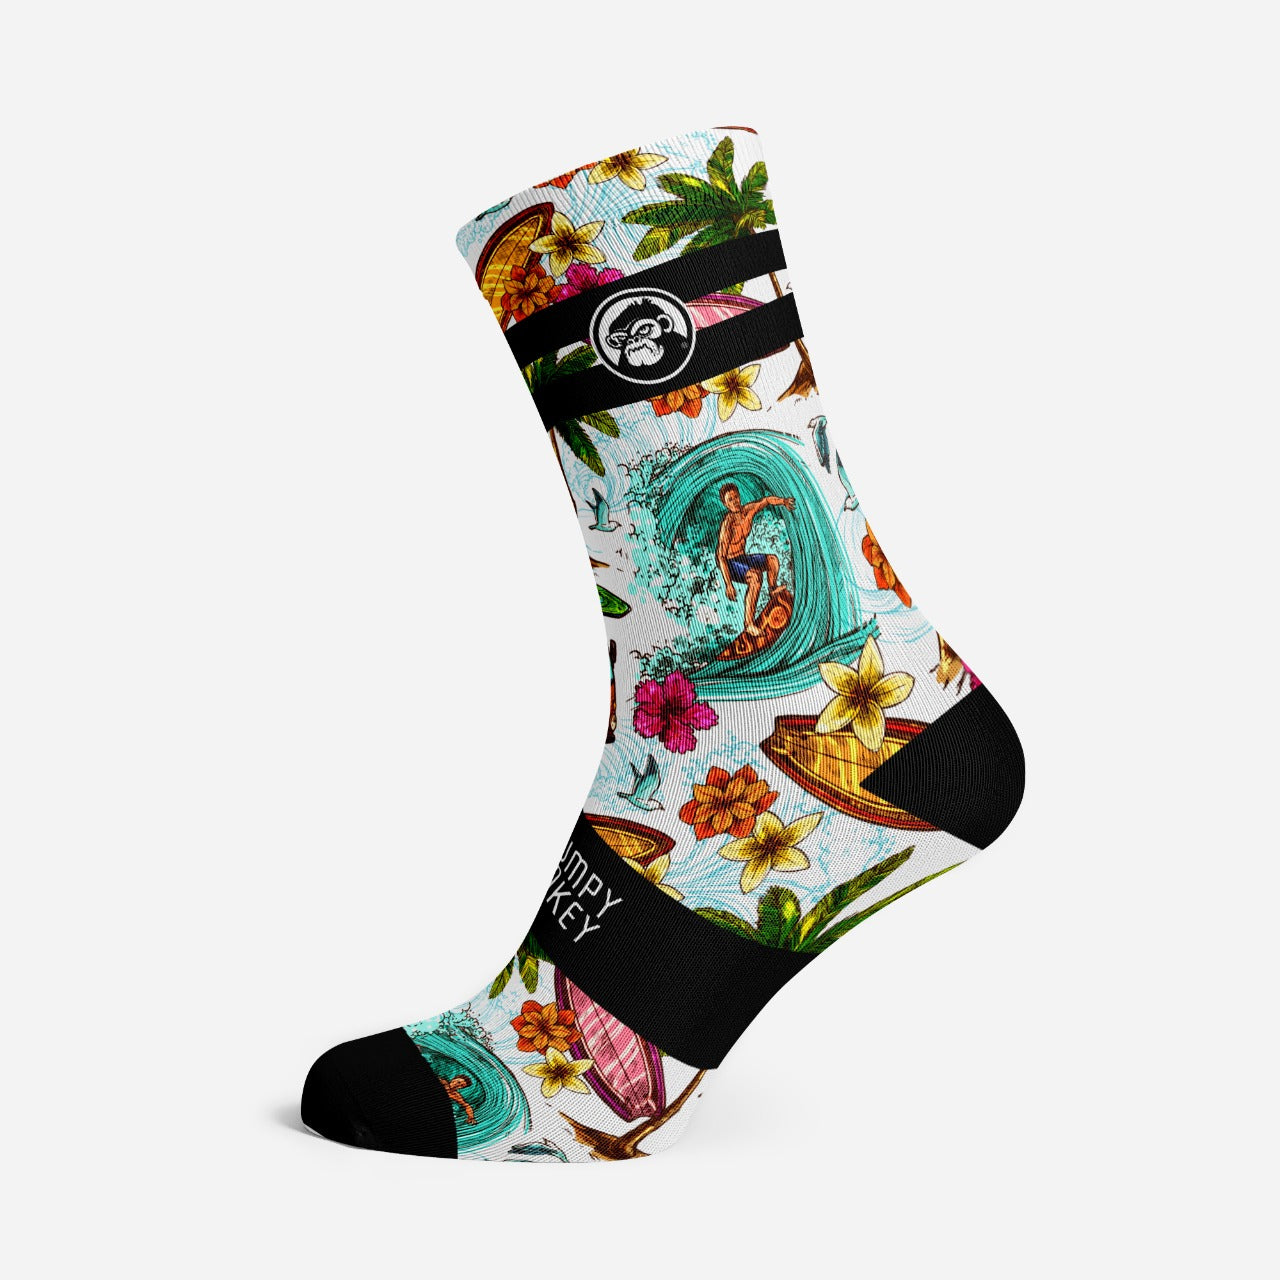 Grumpy Monkey - Premium Printed Socks